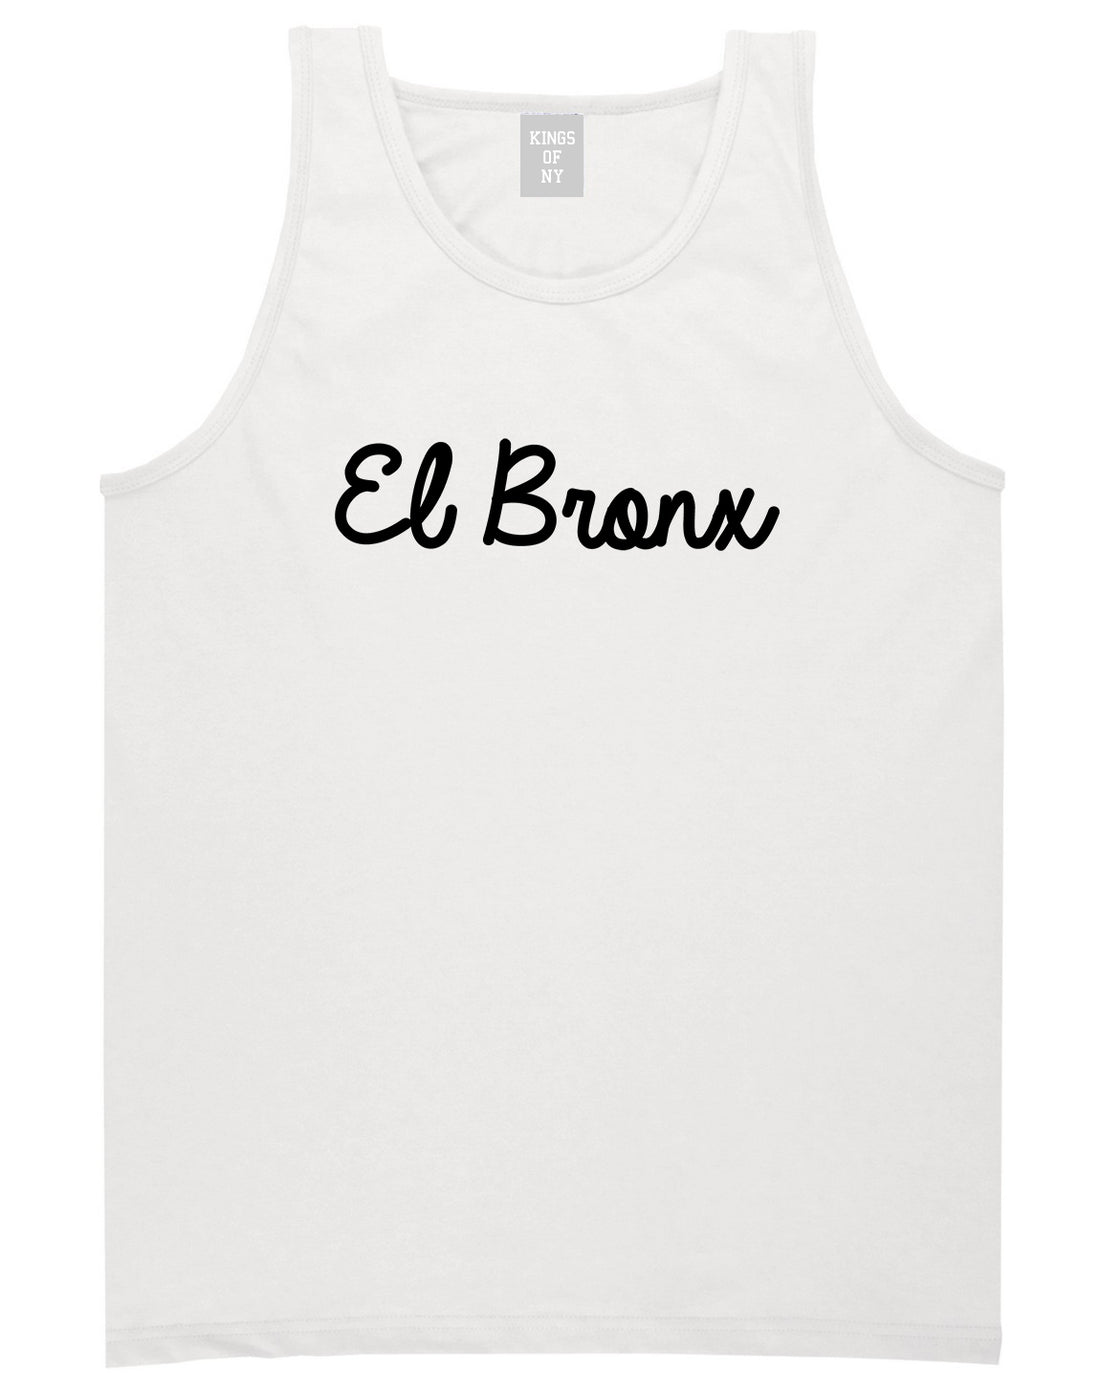 El Bronx Spanish Script Mens Tank Top Shirt White by Kings Of NY